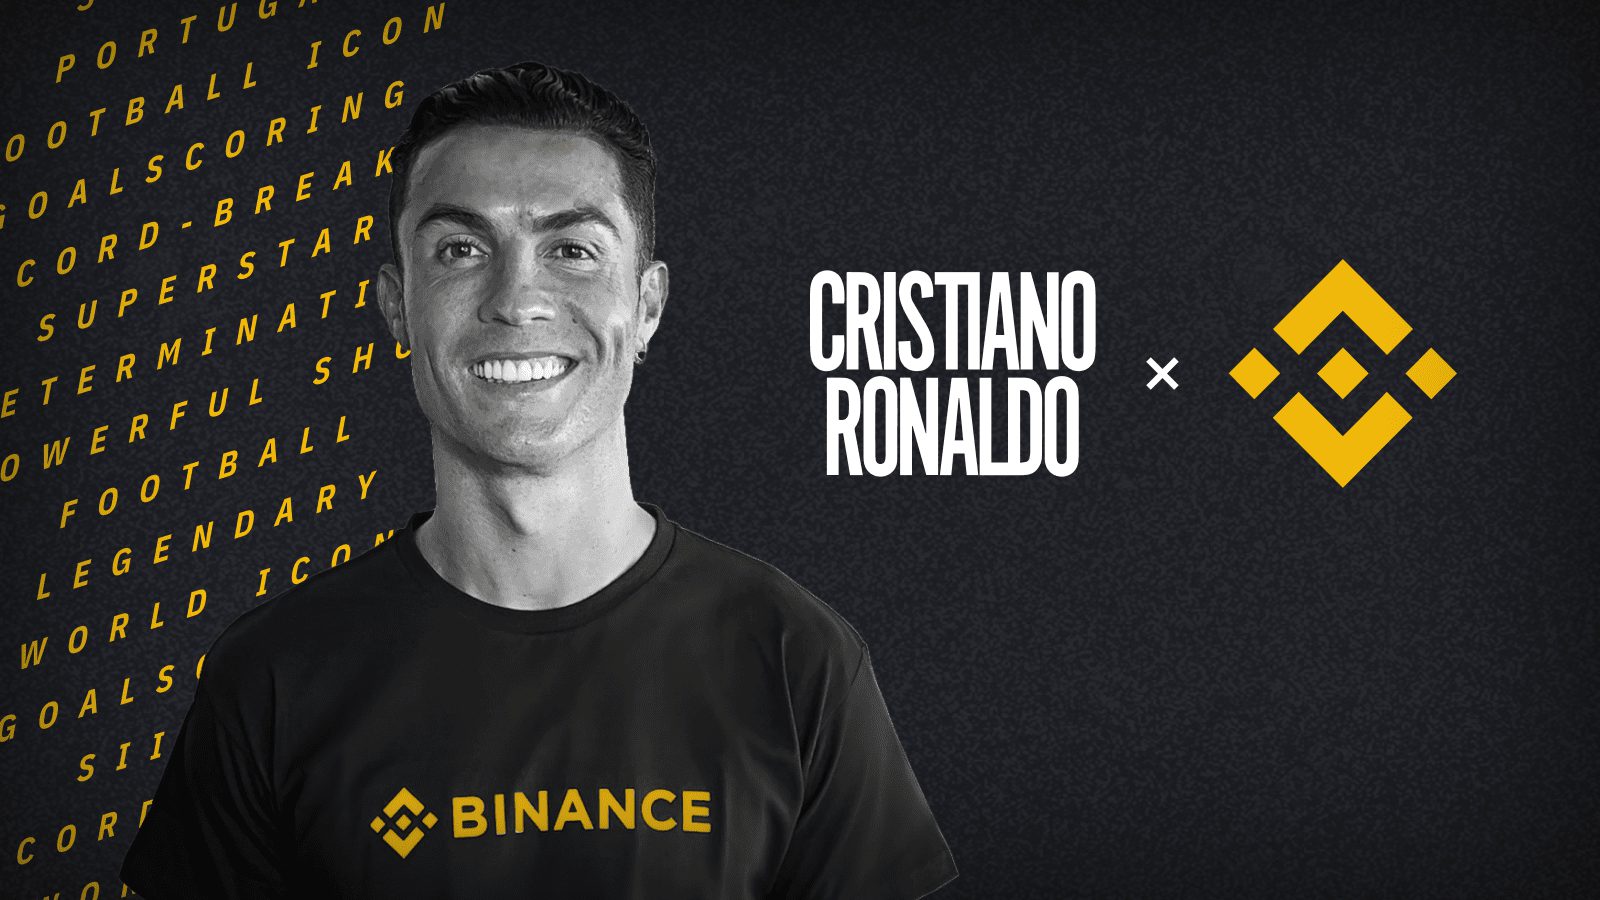 کریستیانو رونالدو فوتبالیست به دلیل تبلیغ بایننس با شکایت روبرو شد